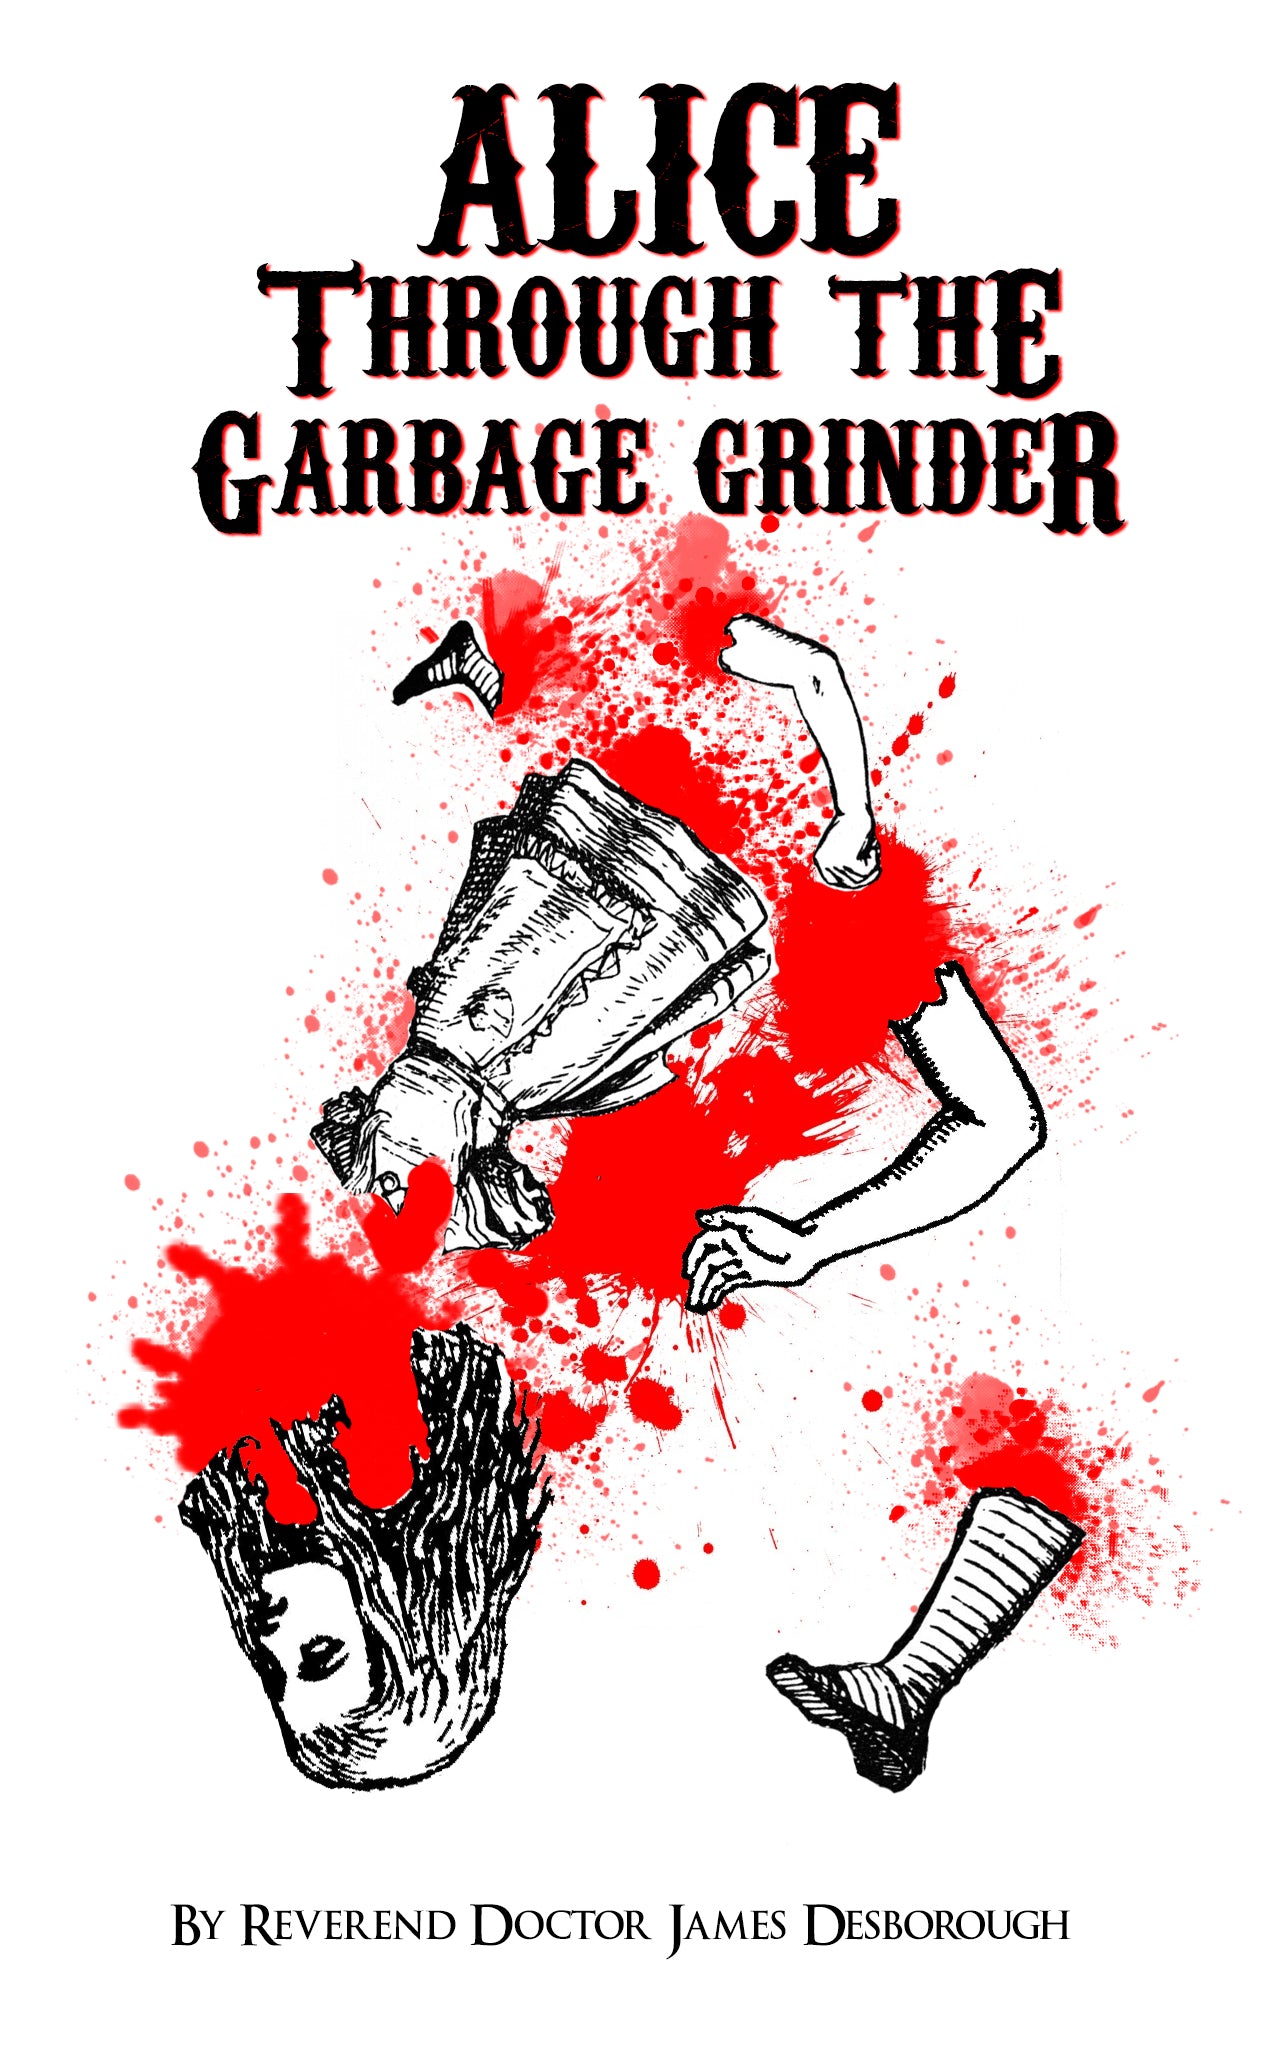 Alice through the Garbage Grinder